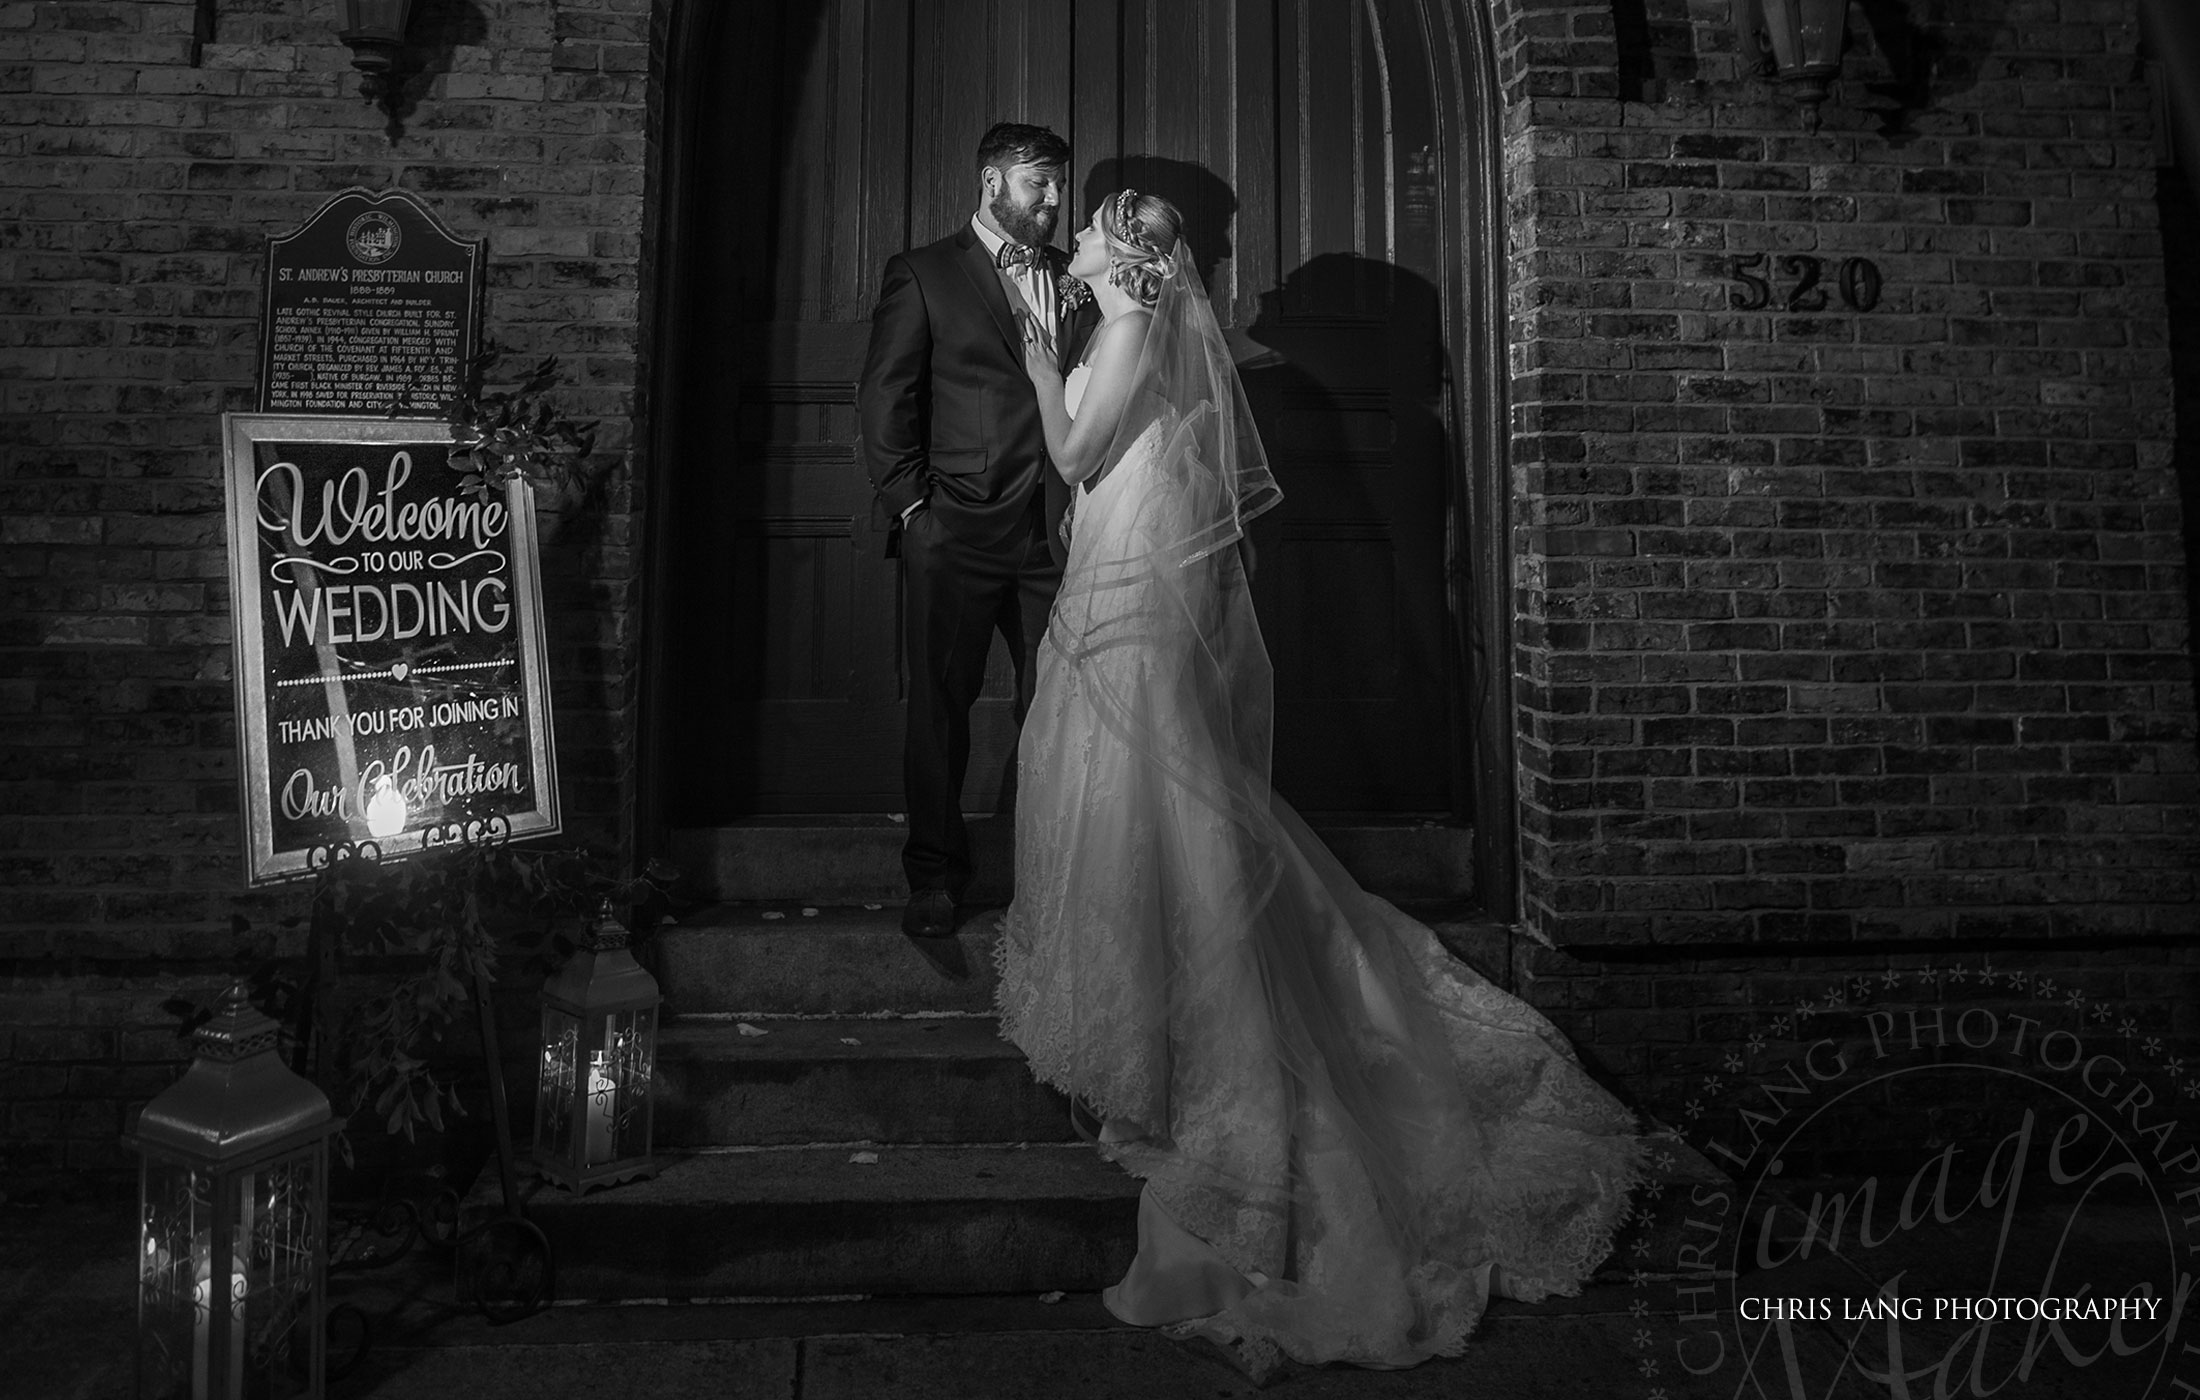 Wedding picture @ brooklyn Arts Center, WIlmington NC - Wedding - photography - photographers